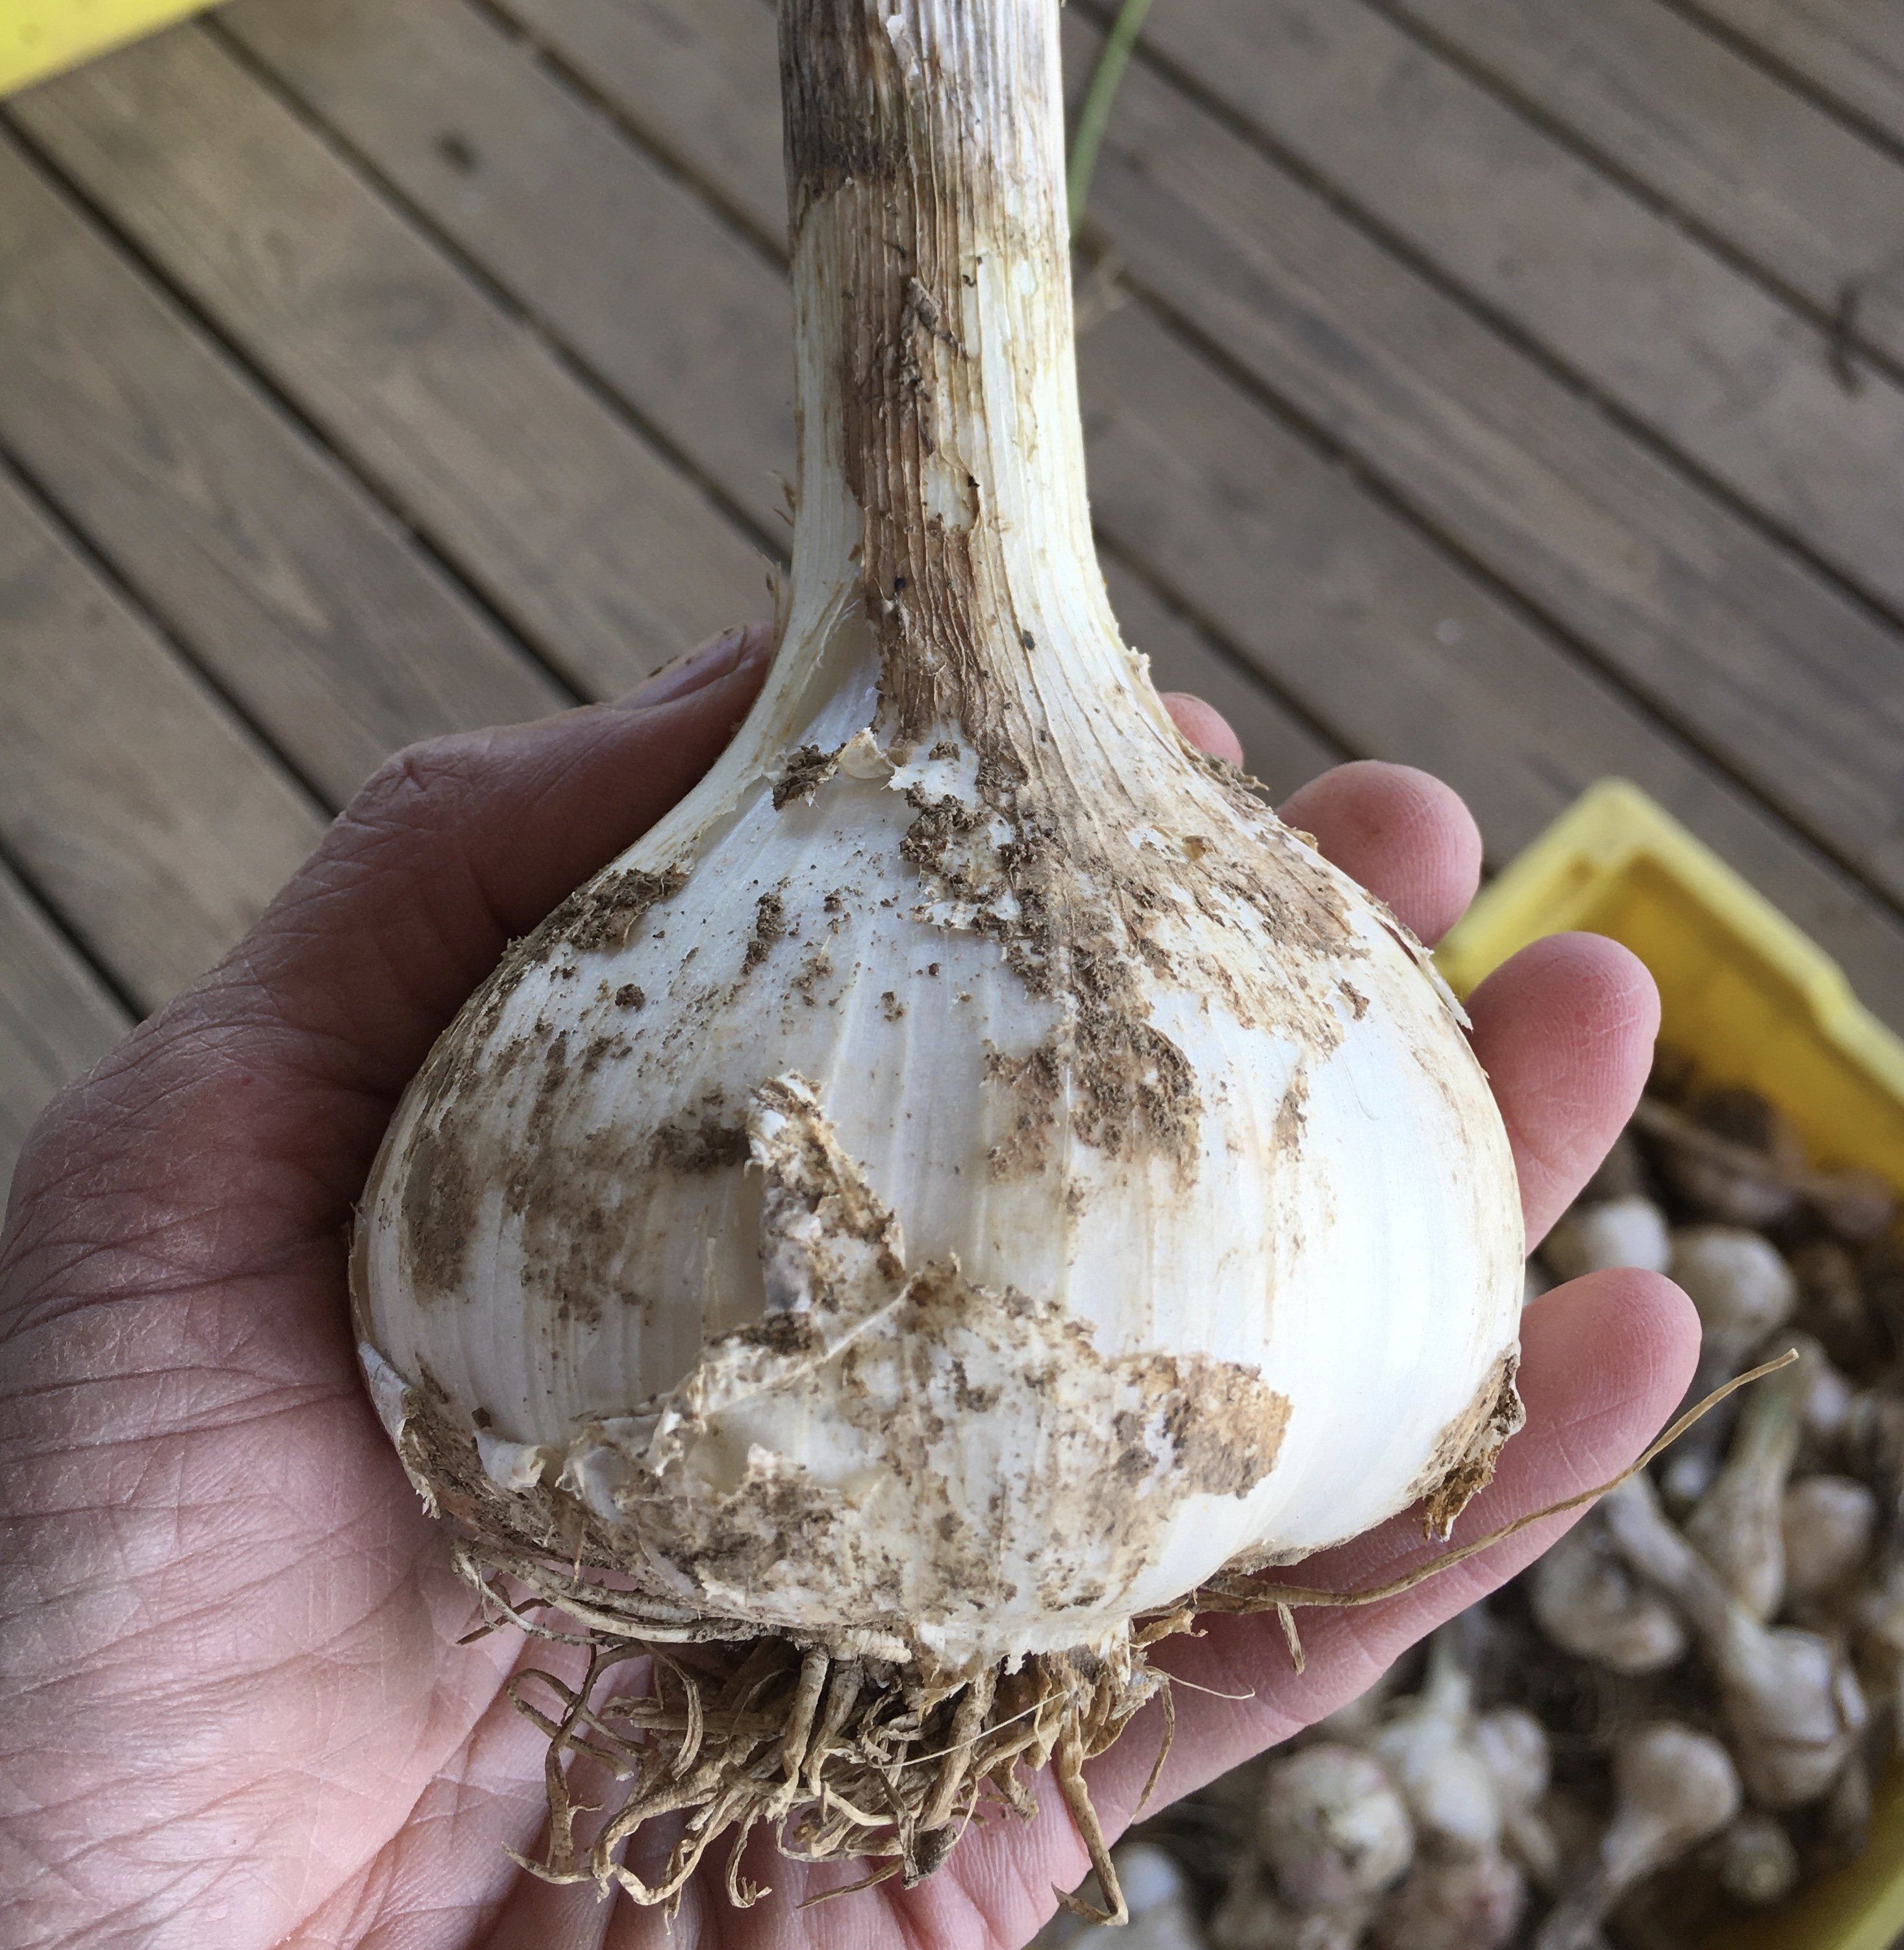 Next Happening: Health-Giving Garlic! (July 5, 2020)